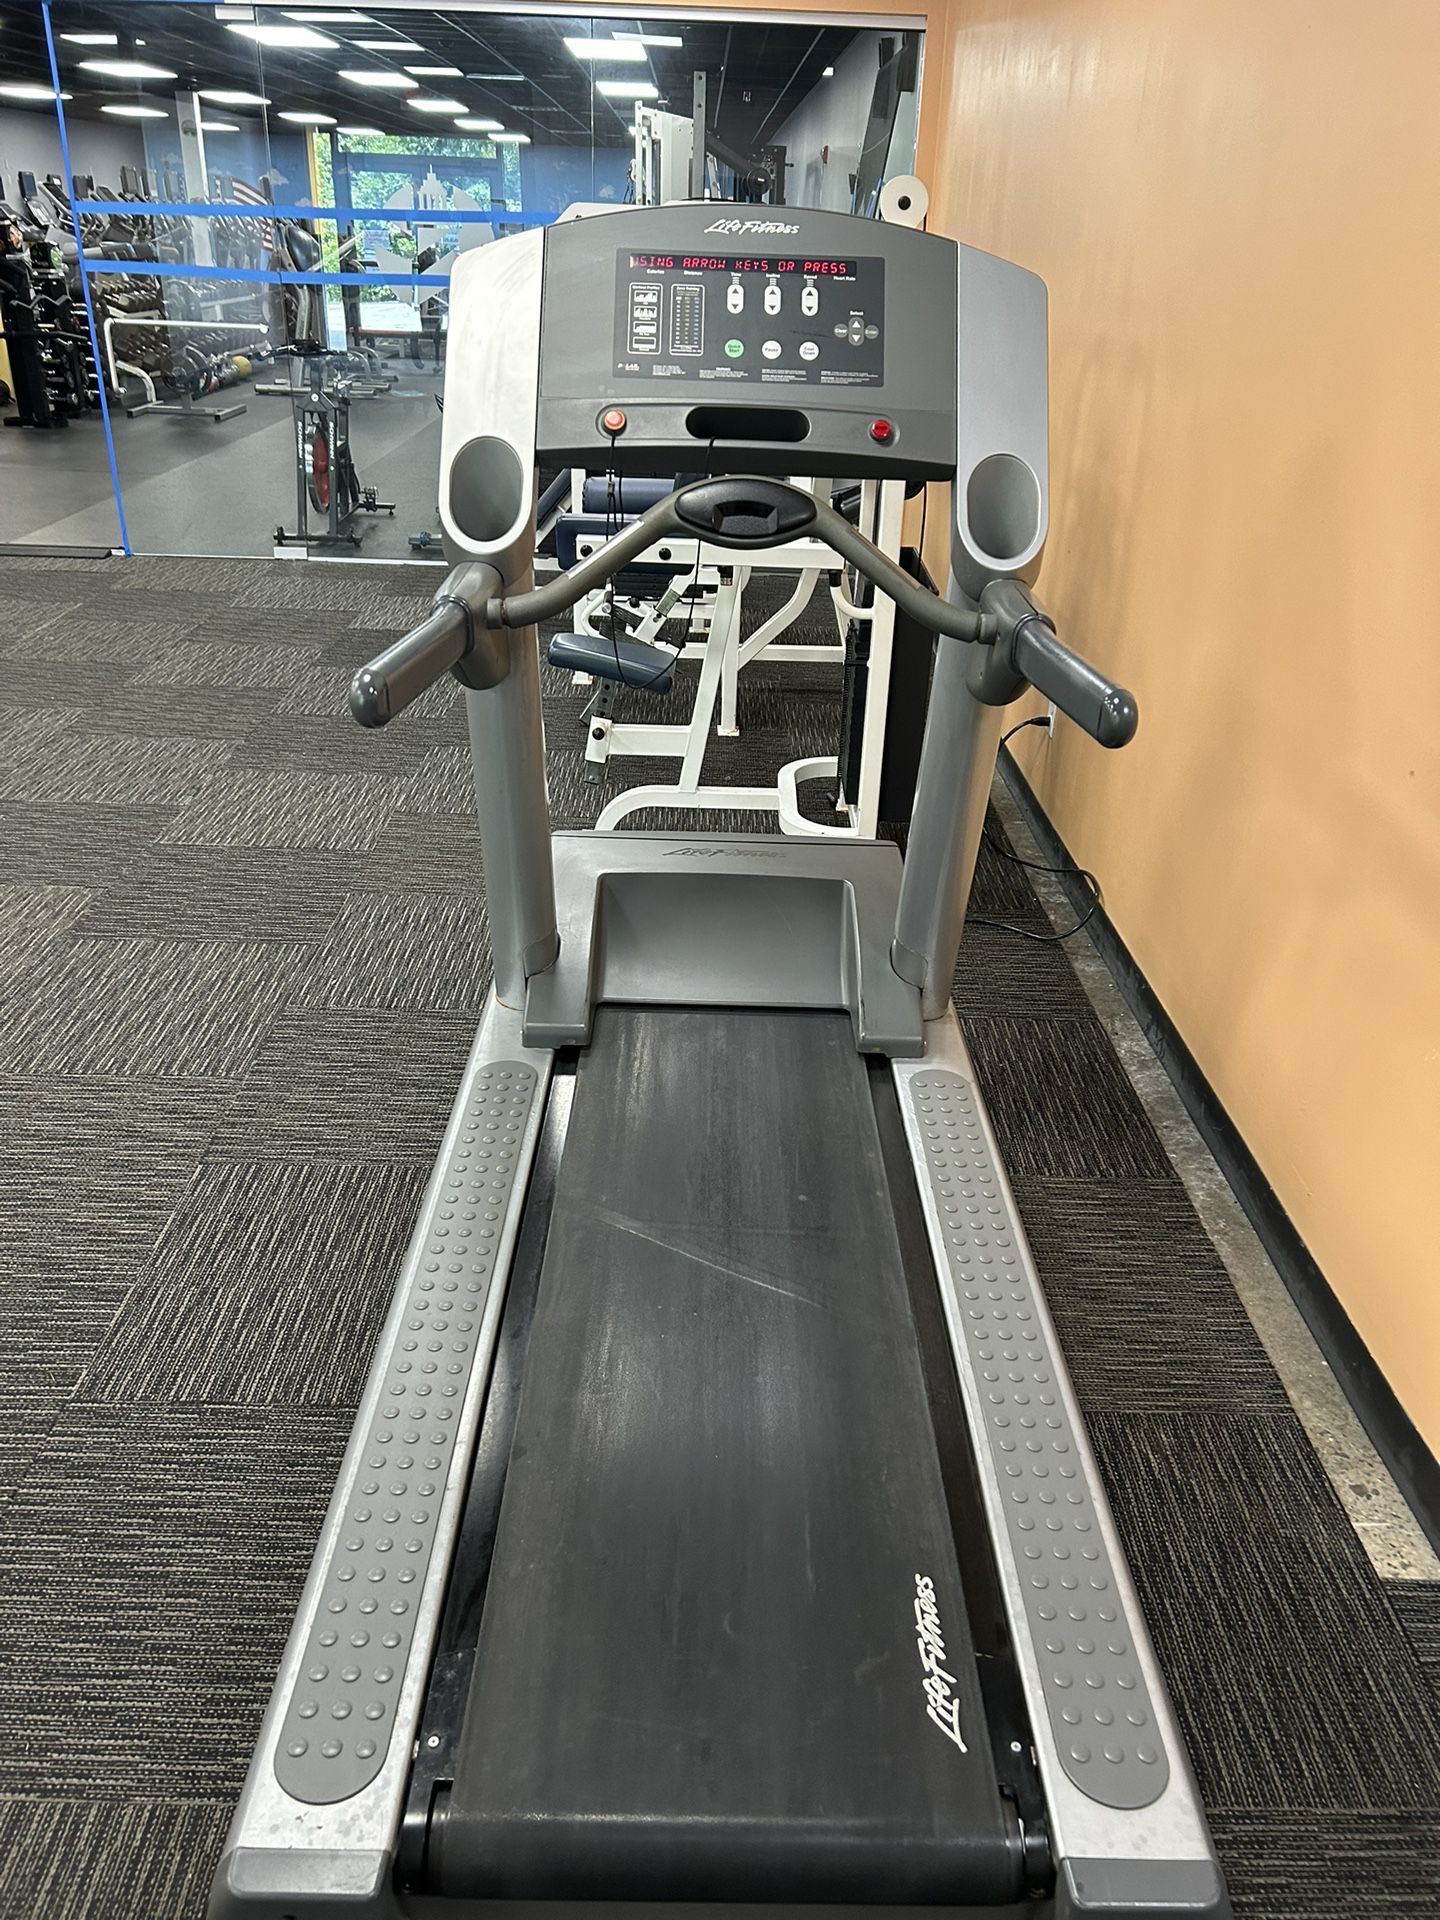 Lifefitness 93t Treadmill 